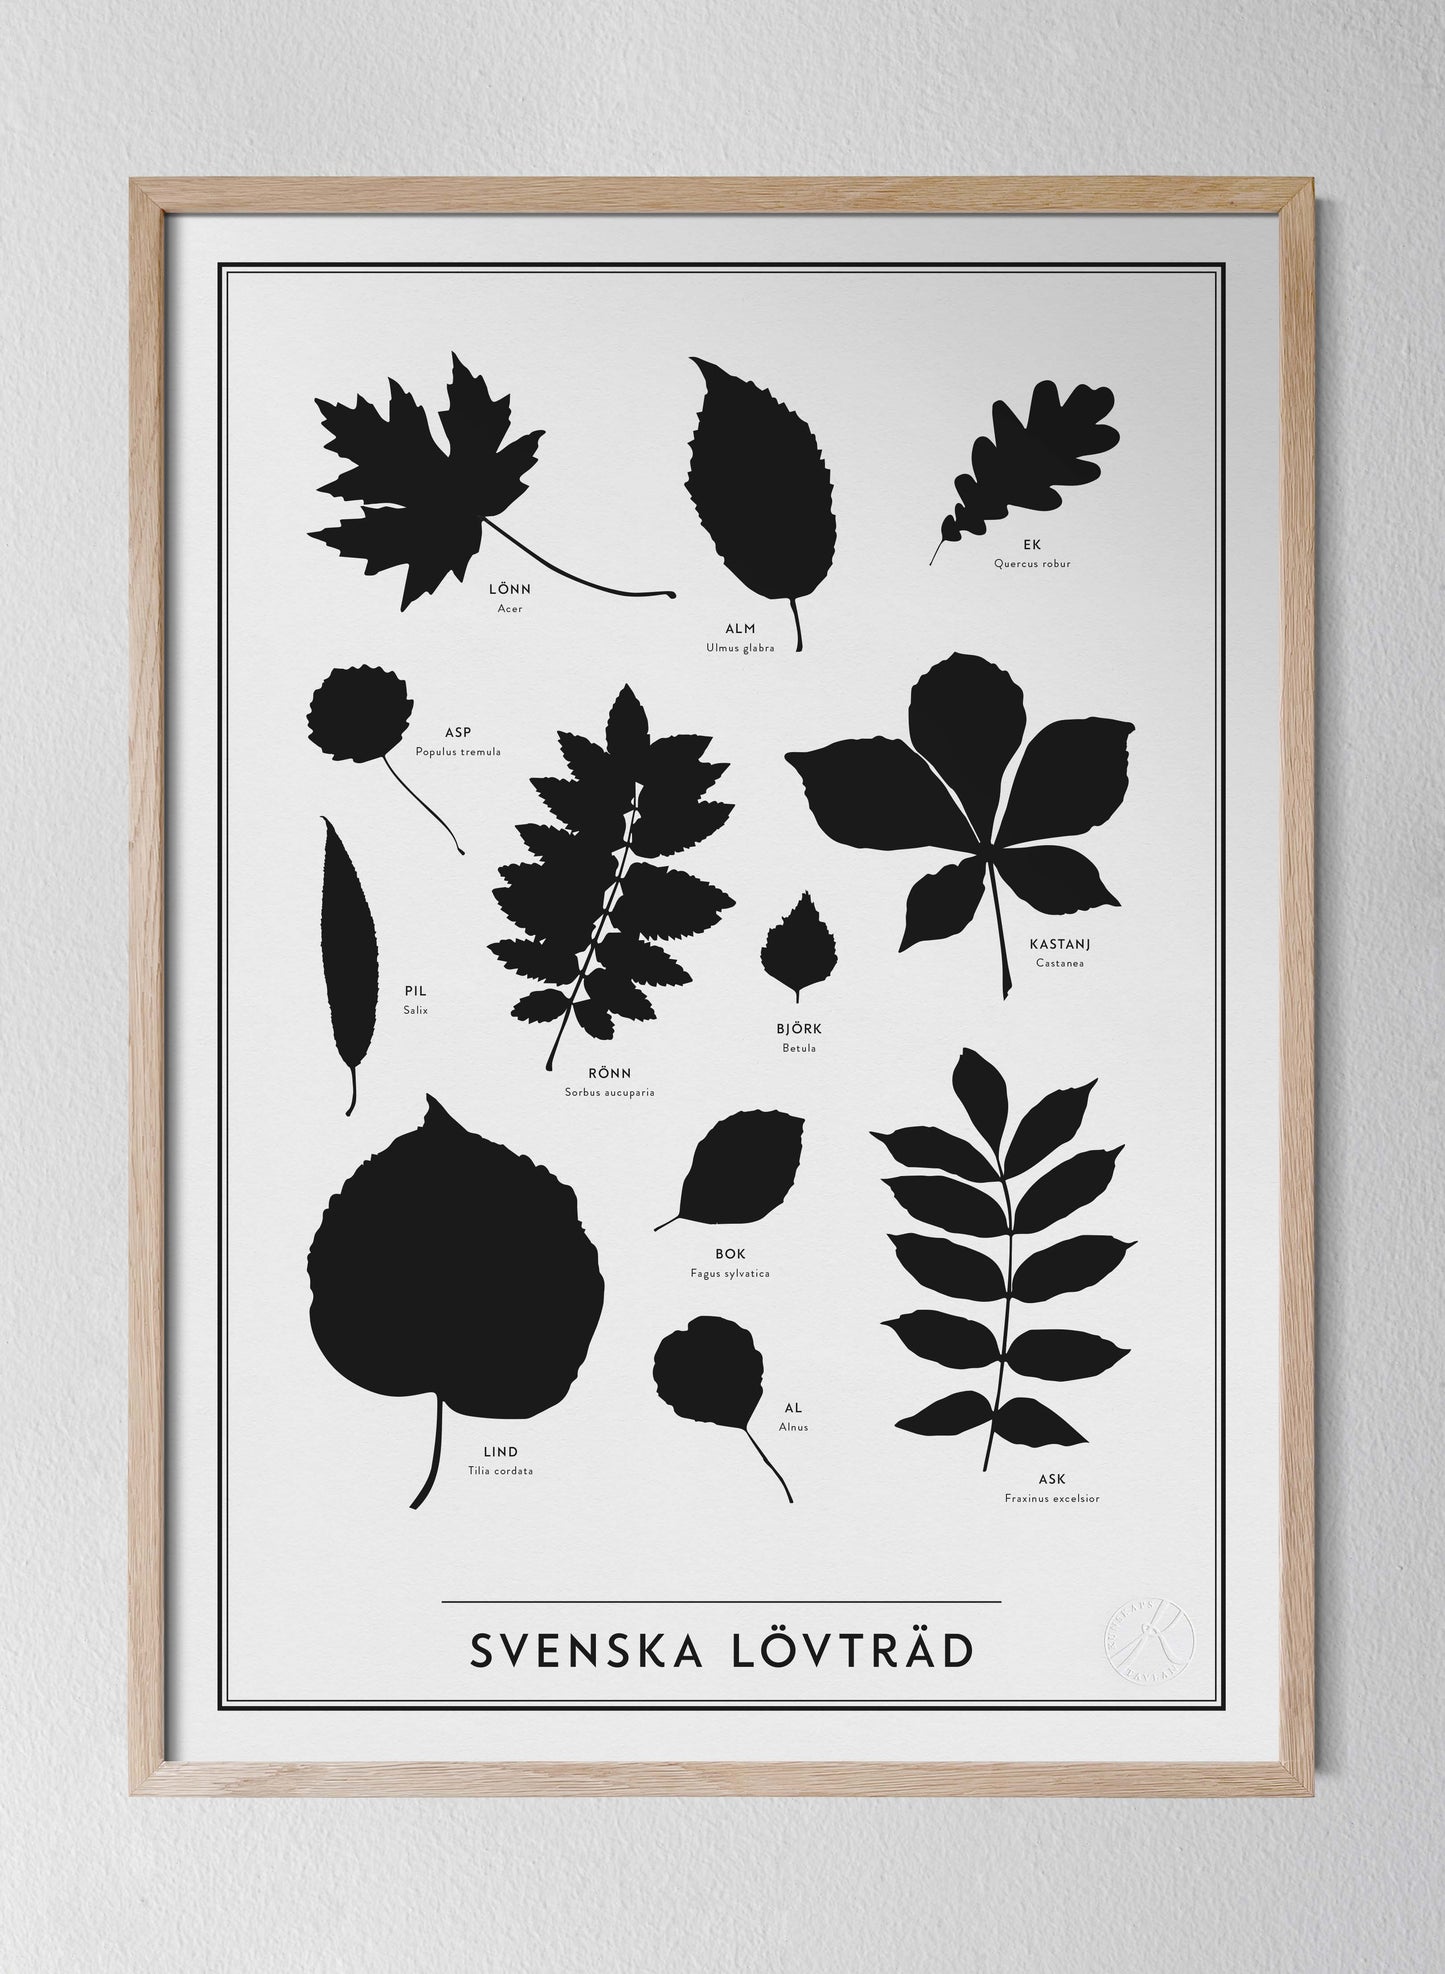 Svenska lövträd - Swedish Leaves in Swedish